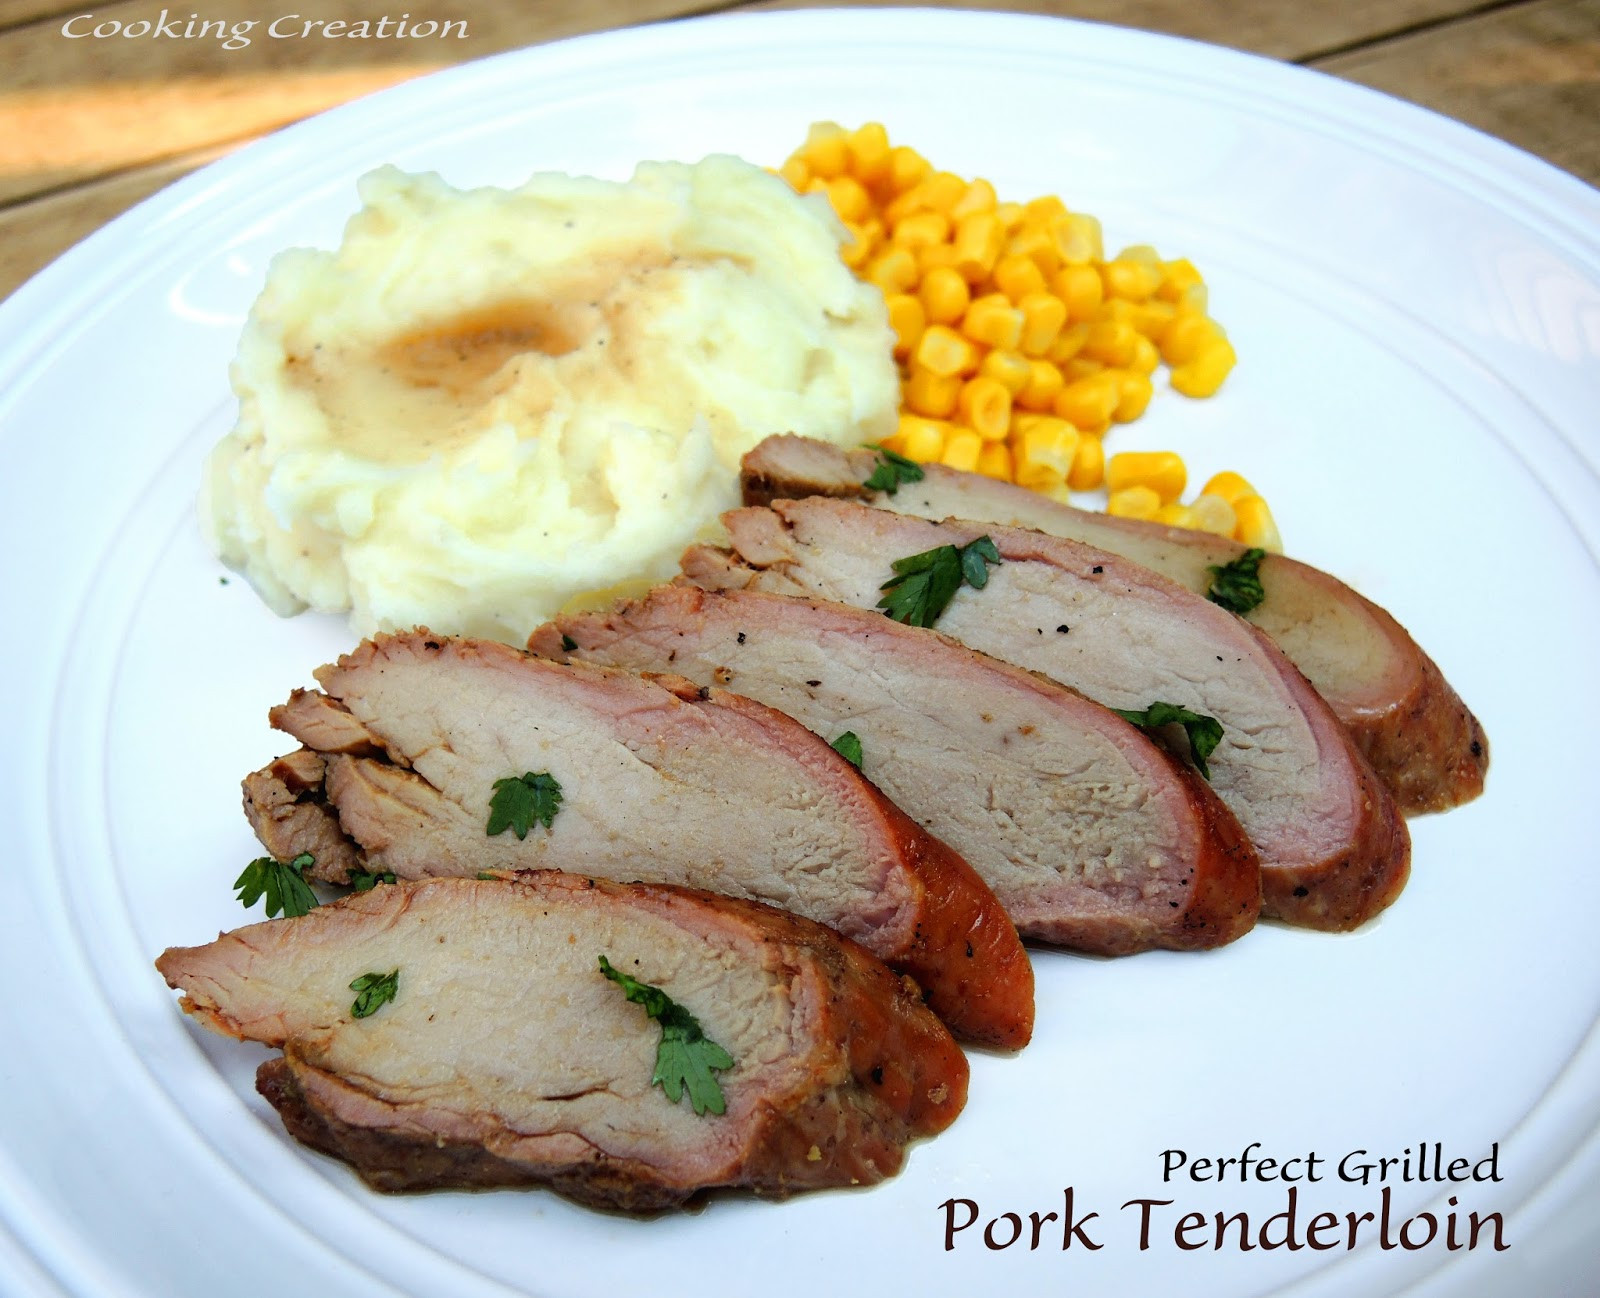 Perfect Pork Tenderloin
 Cooking Creation Perfect Grilled Pork Tenderloin